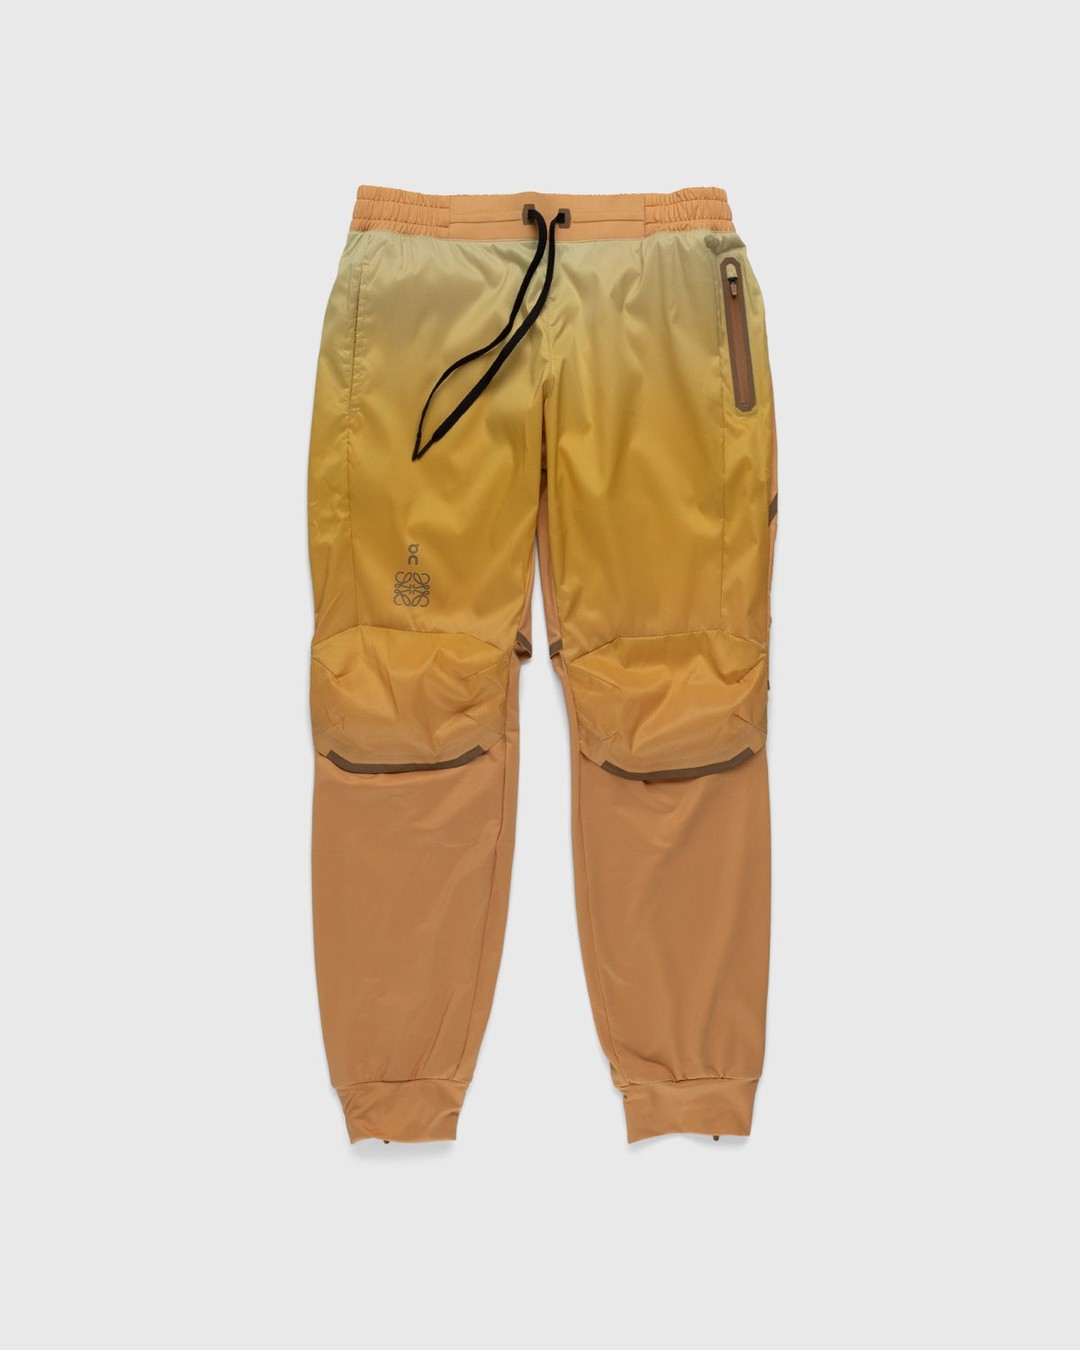 Loewe x On – Women's Technical Running Pants Gradient Orange - Pants - Orange - Image 1